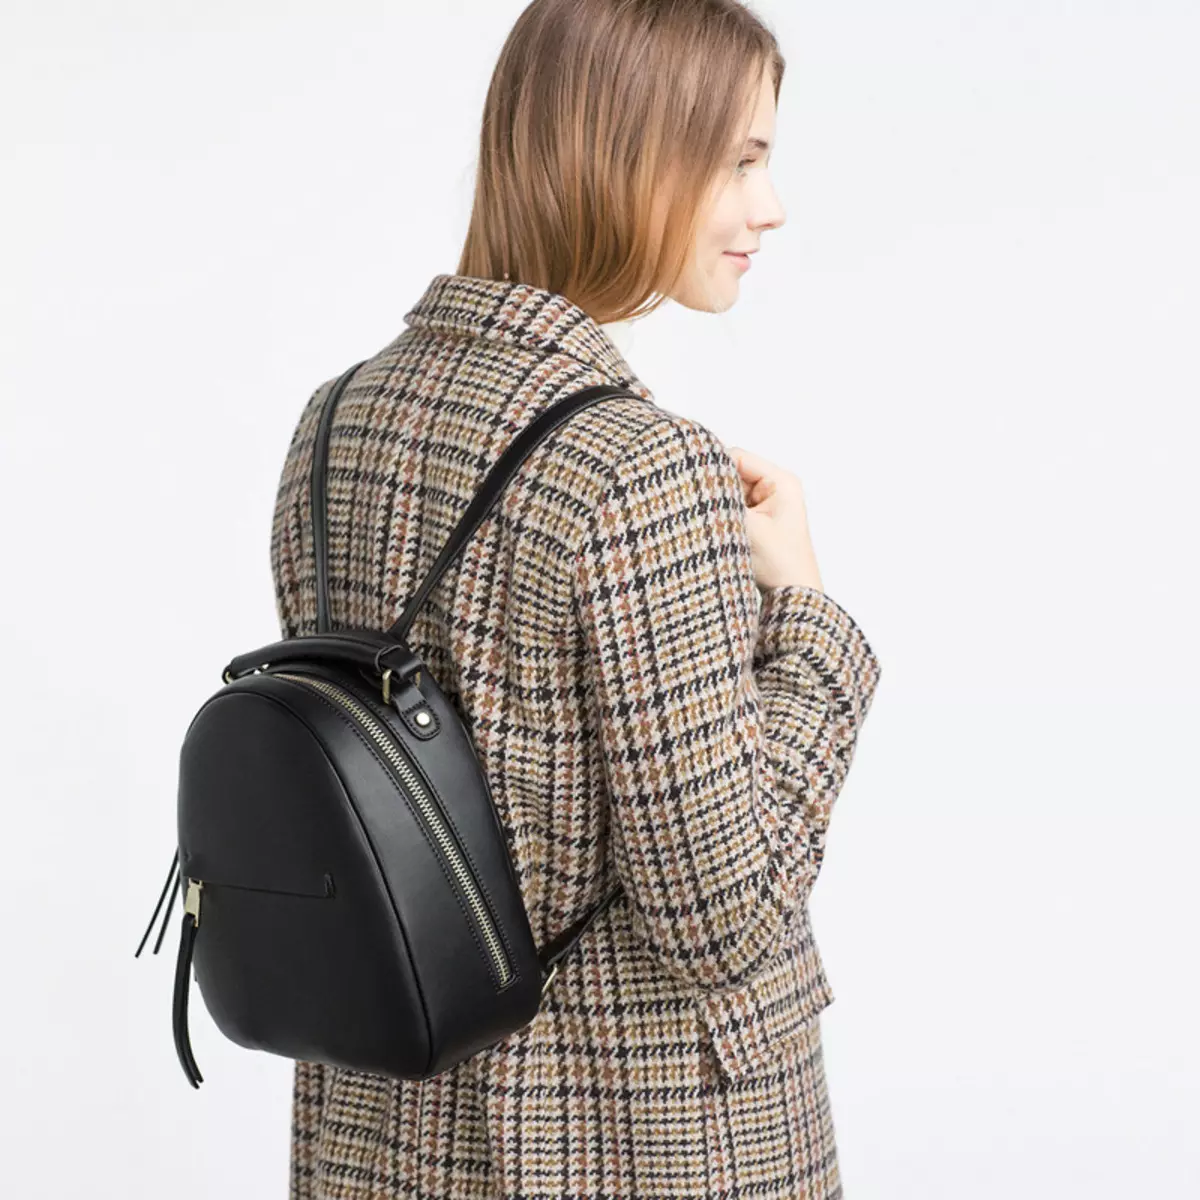 ZARA Backpacks: سیاہ خاتون، بچوں کے لئے بچوں، سرمئی اور سرخ، ساتھ ساتھ کمپنی سے بیگ بیگ بیگ کے دیگر ماڈل. پہننے کے لئے کیا سب سے بہتر ہے؟ 15437_47